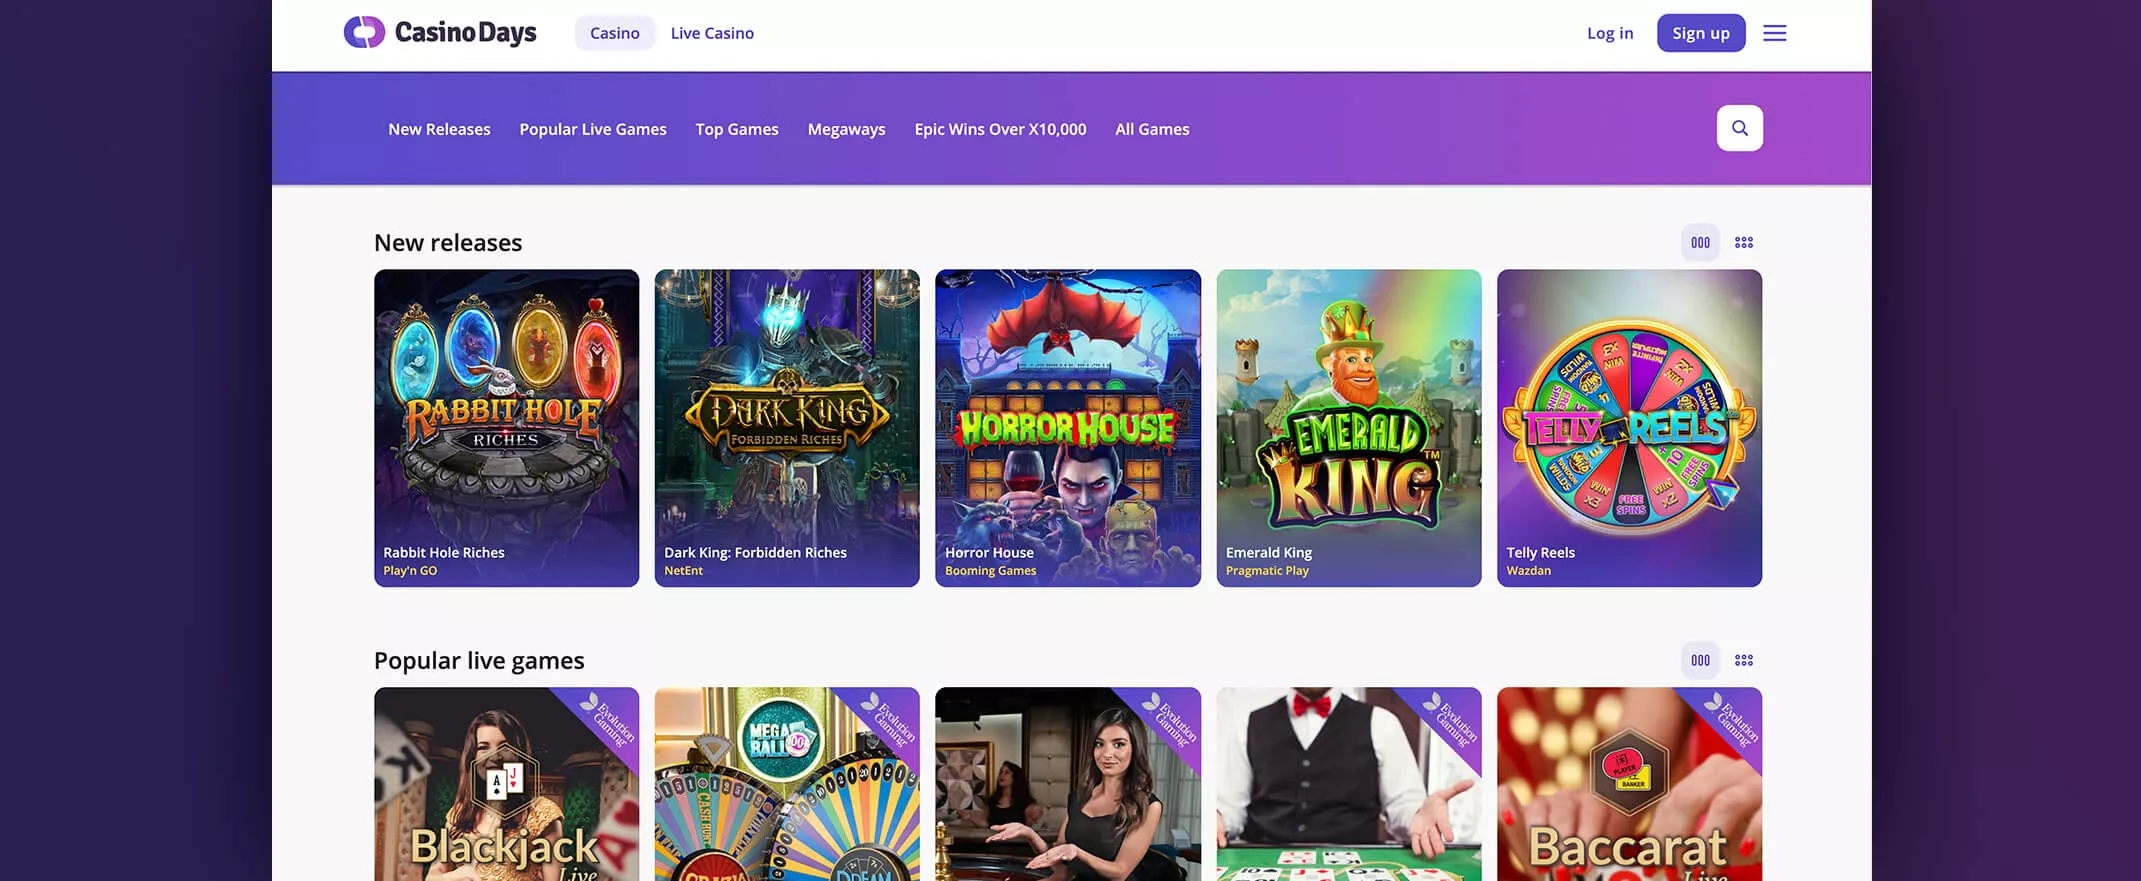 CasinoDays games screenshot